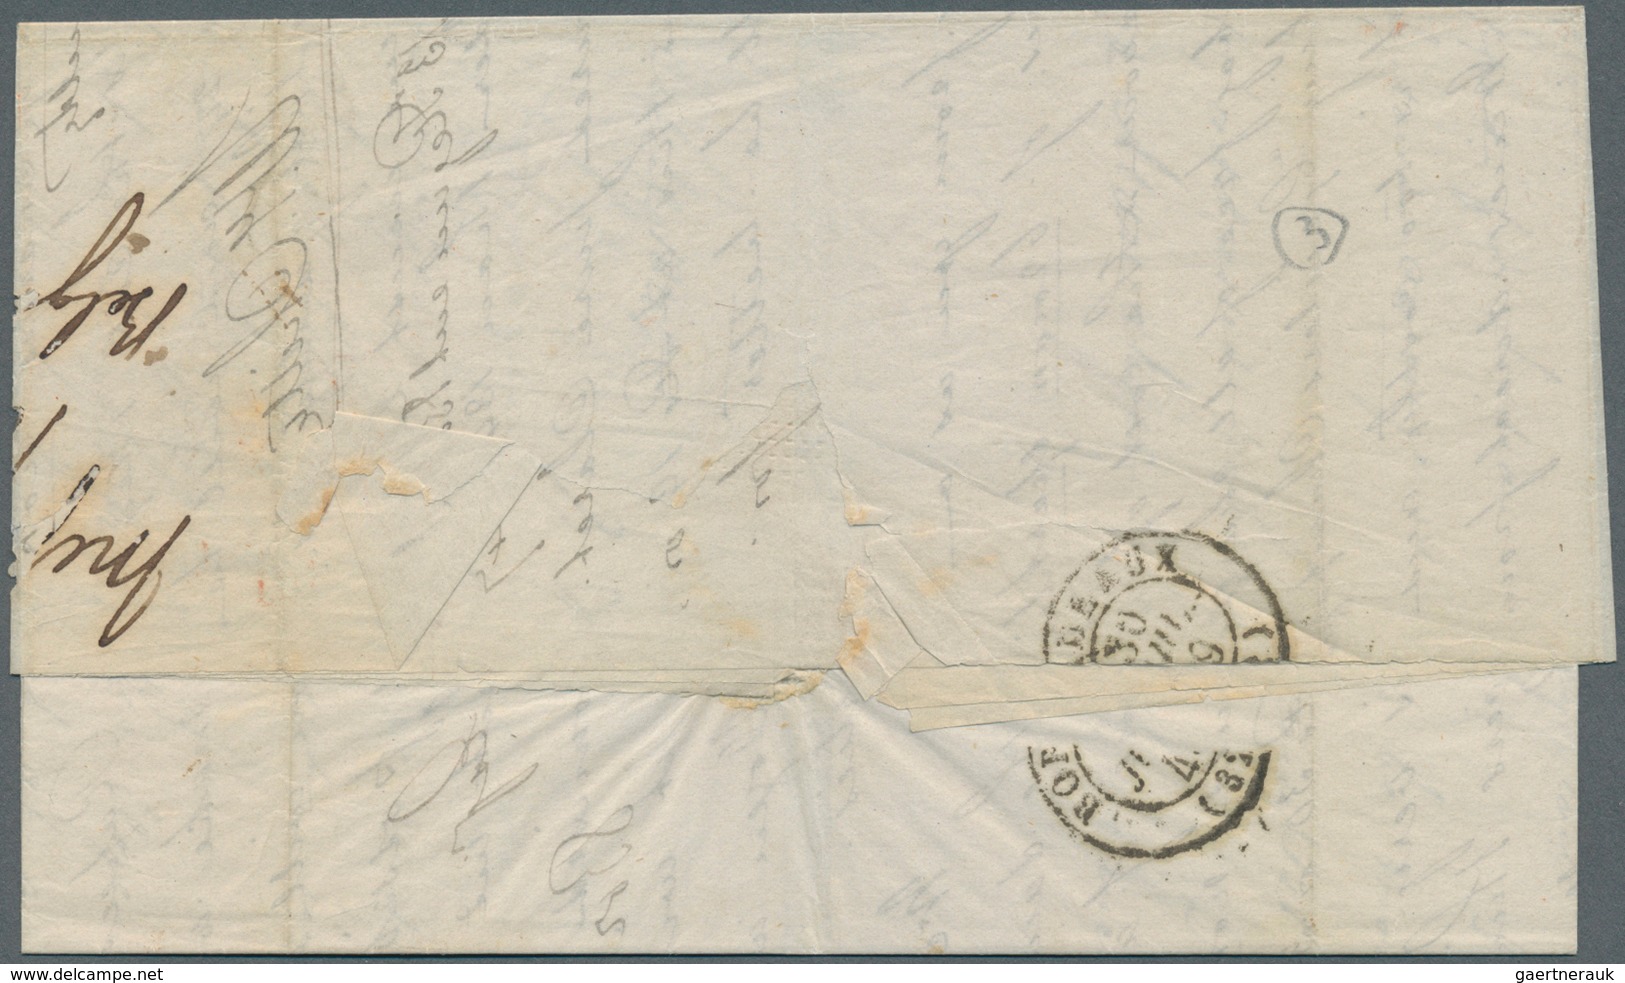 Indien - Vorphilatelie: 1827-1850: Four letters to Bordeaux, FRANCE, with 1) 1827 letter from Calcut